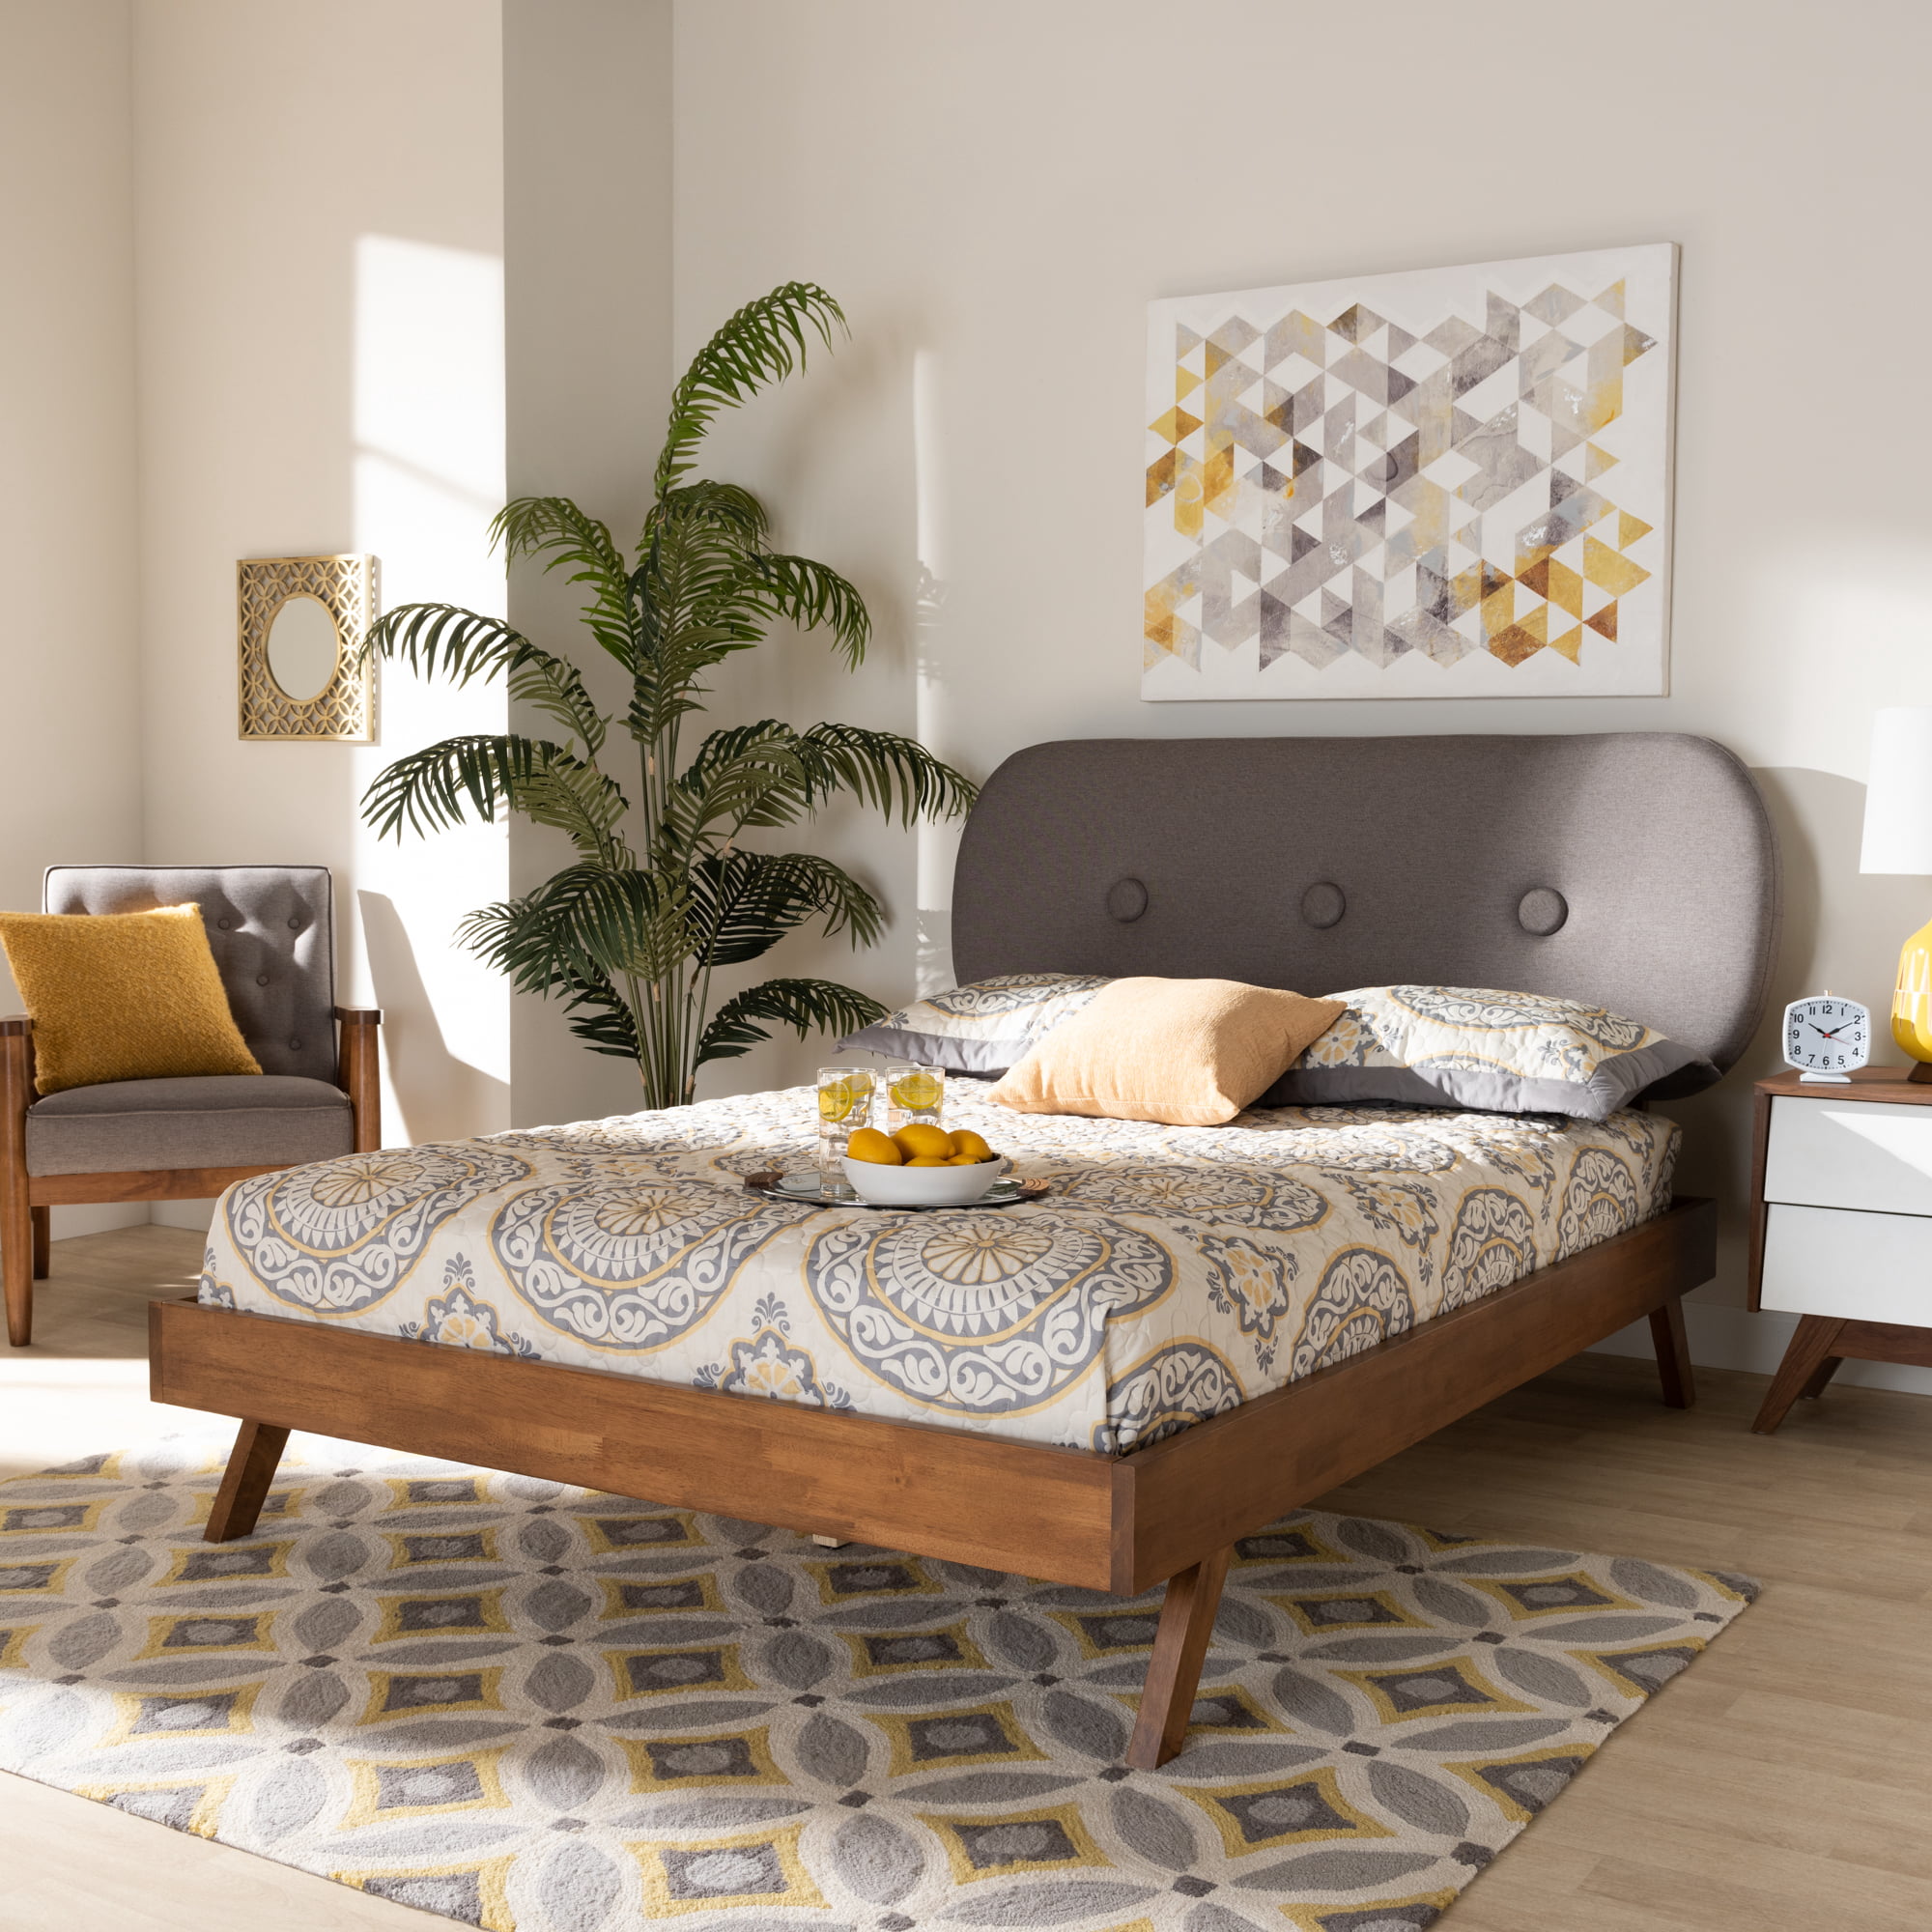 mid century modern bedroom set